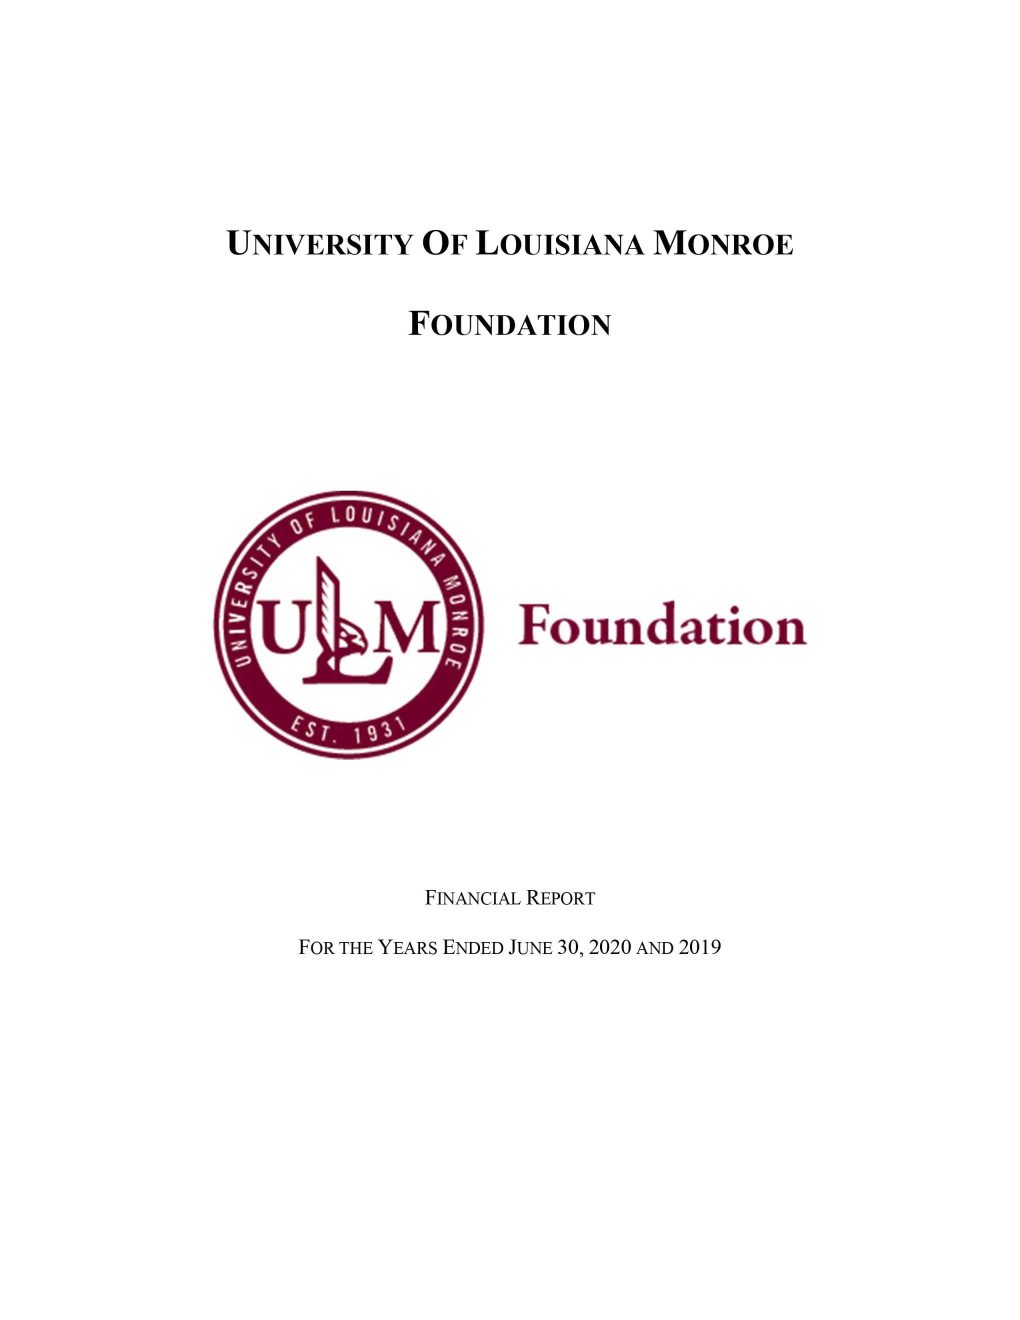 University of Louisiana at Monroe Foundation